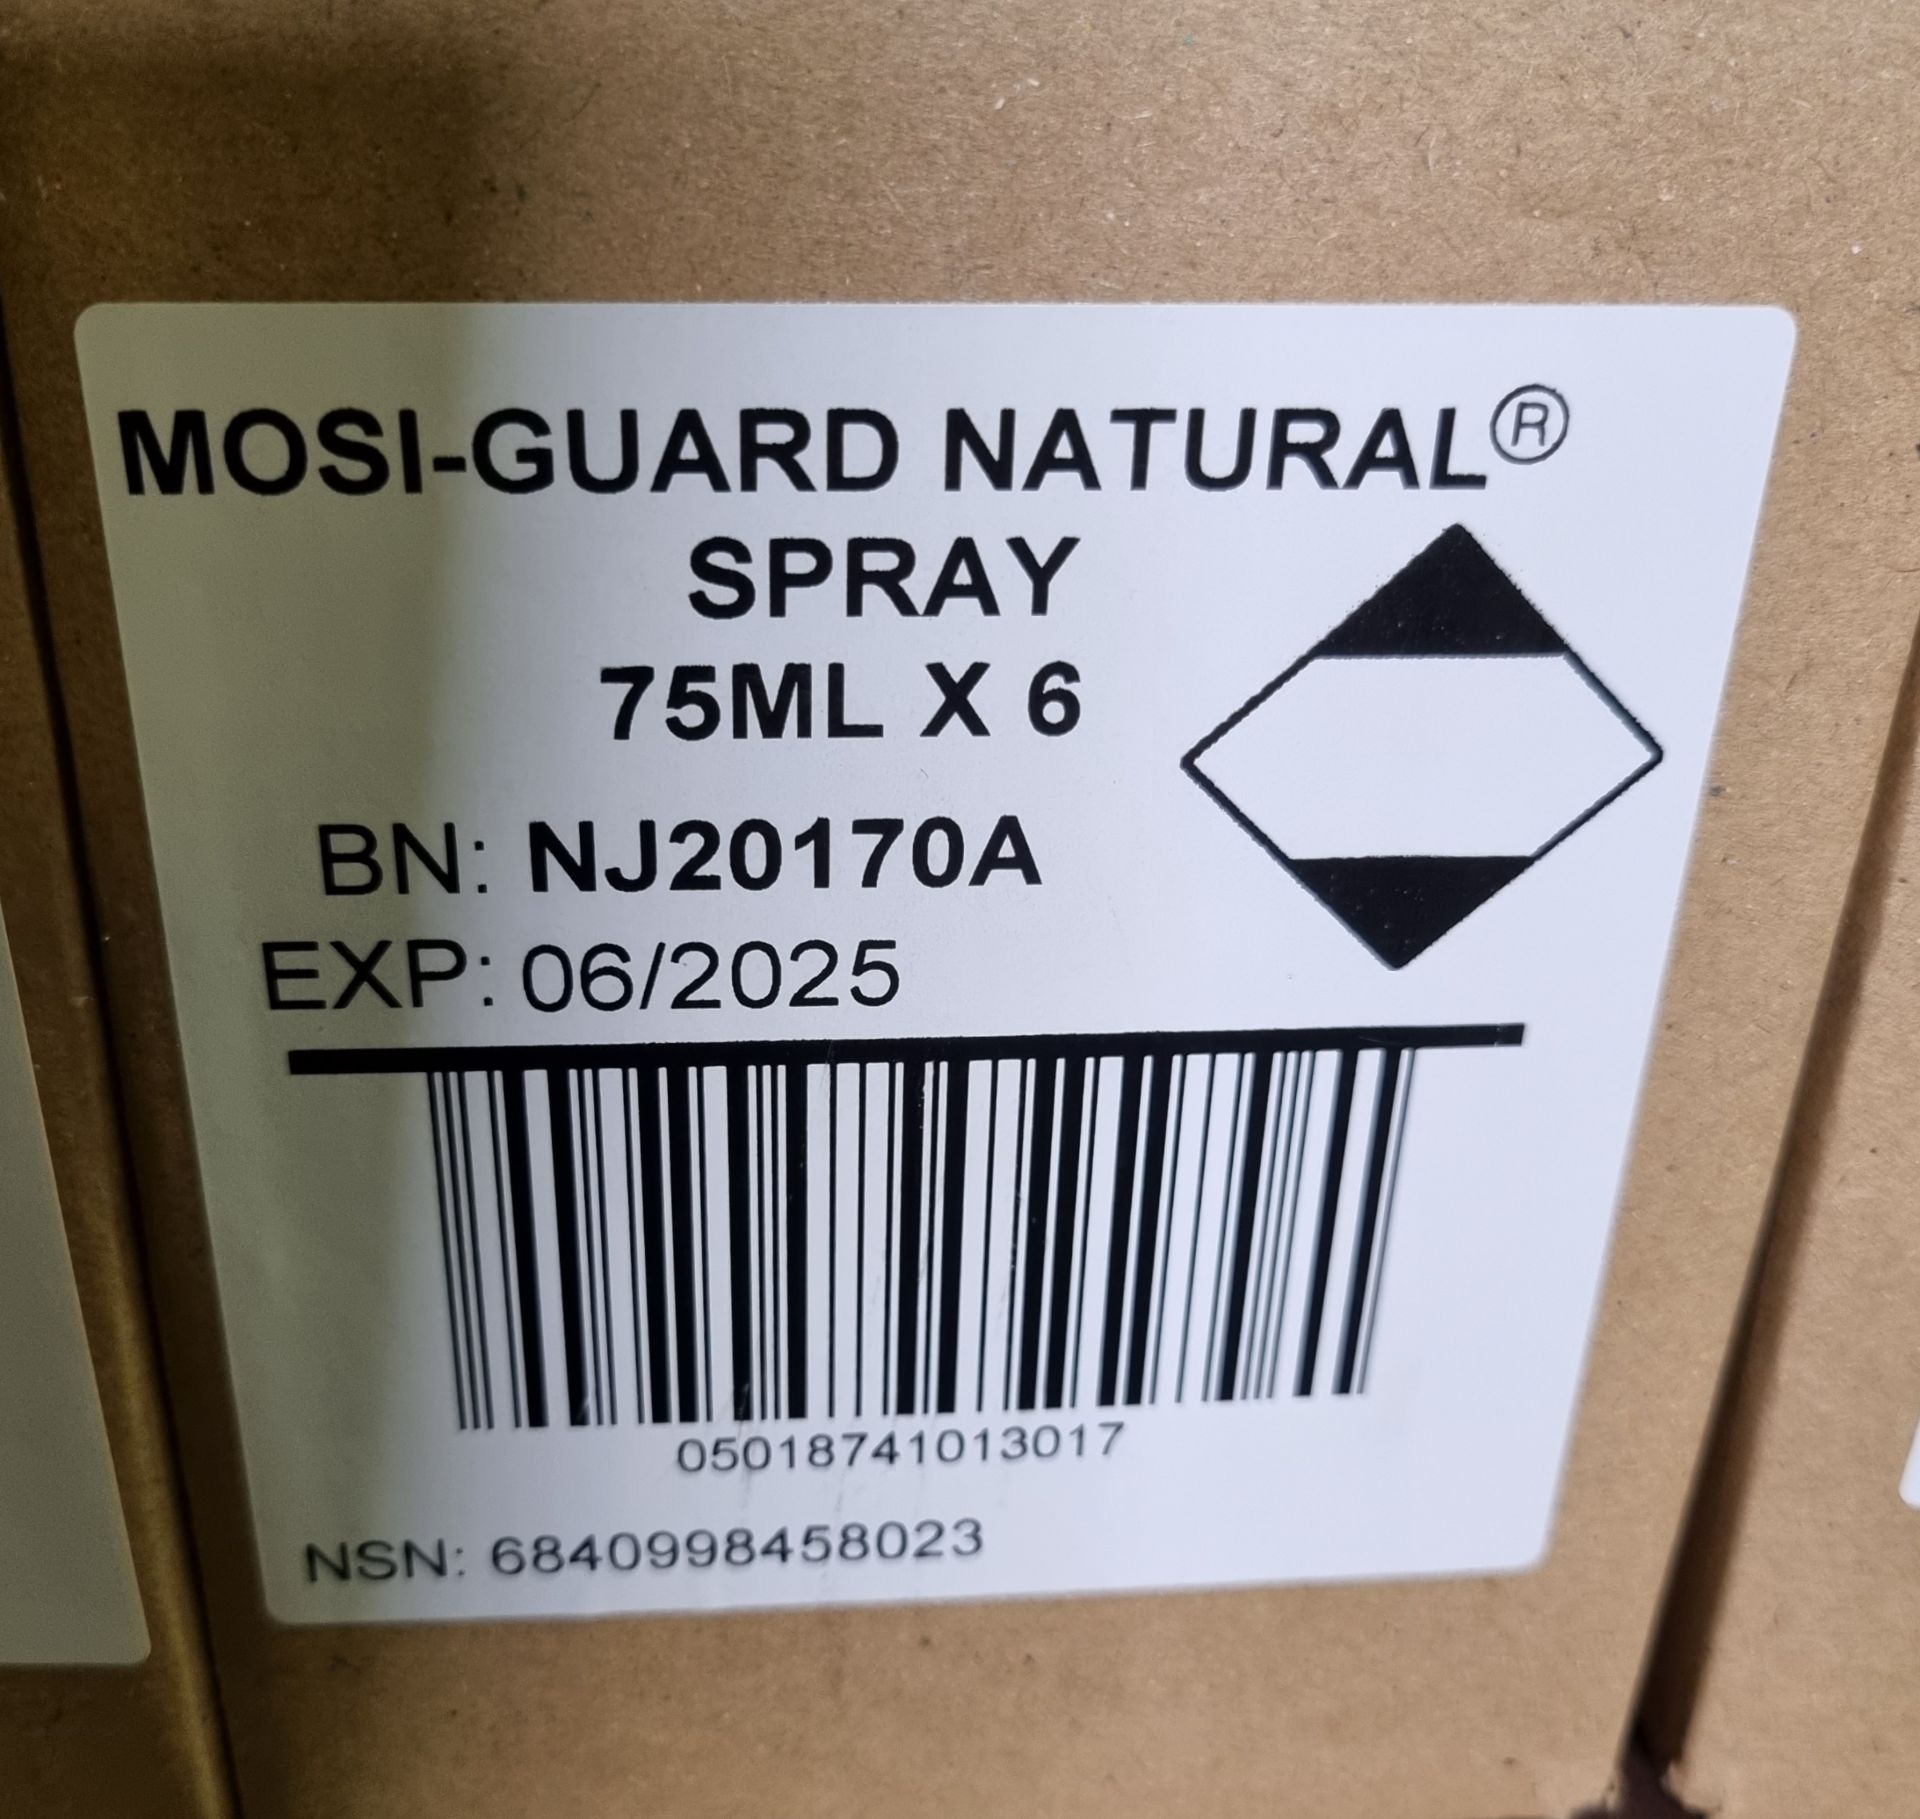 32x boxes of Mosi-Guard Natural Spray - 6x 75ml bottles per box - Image 2 of 5